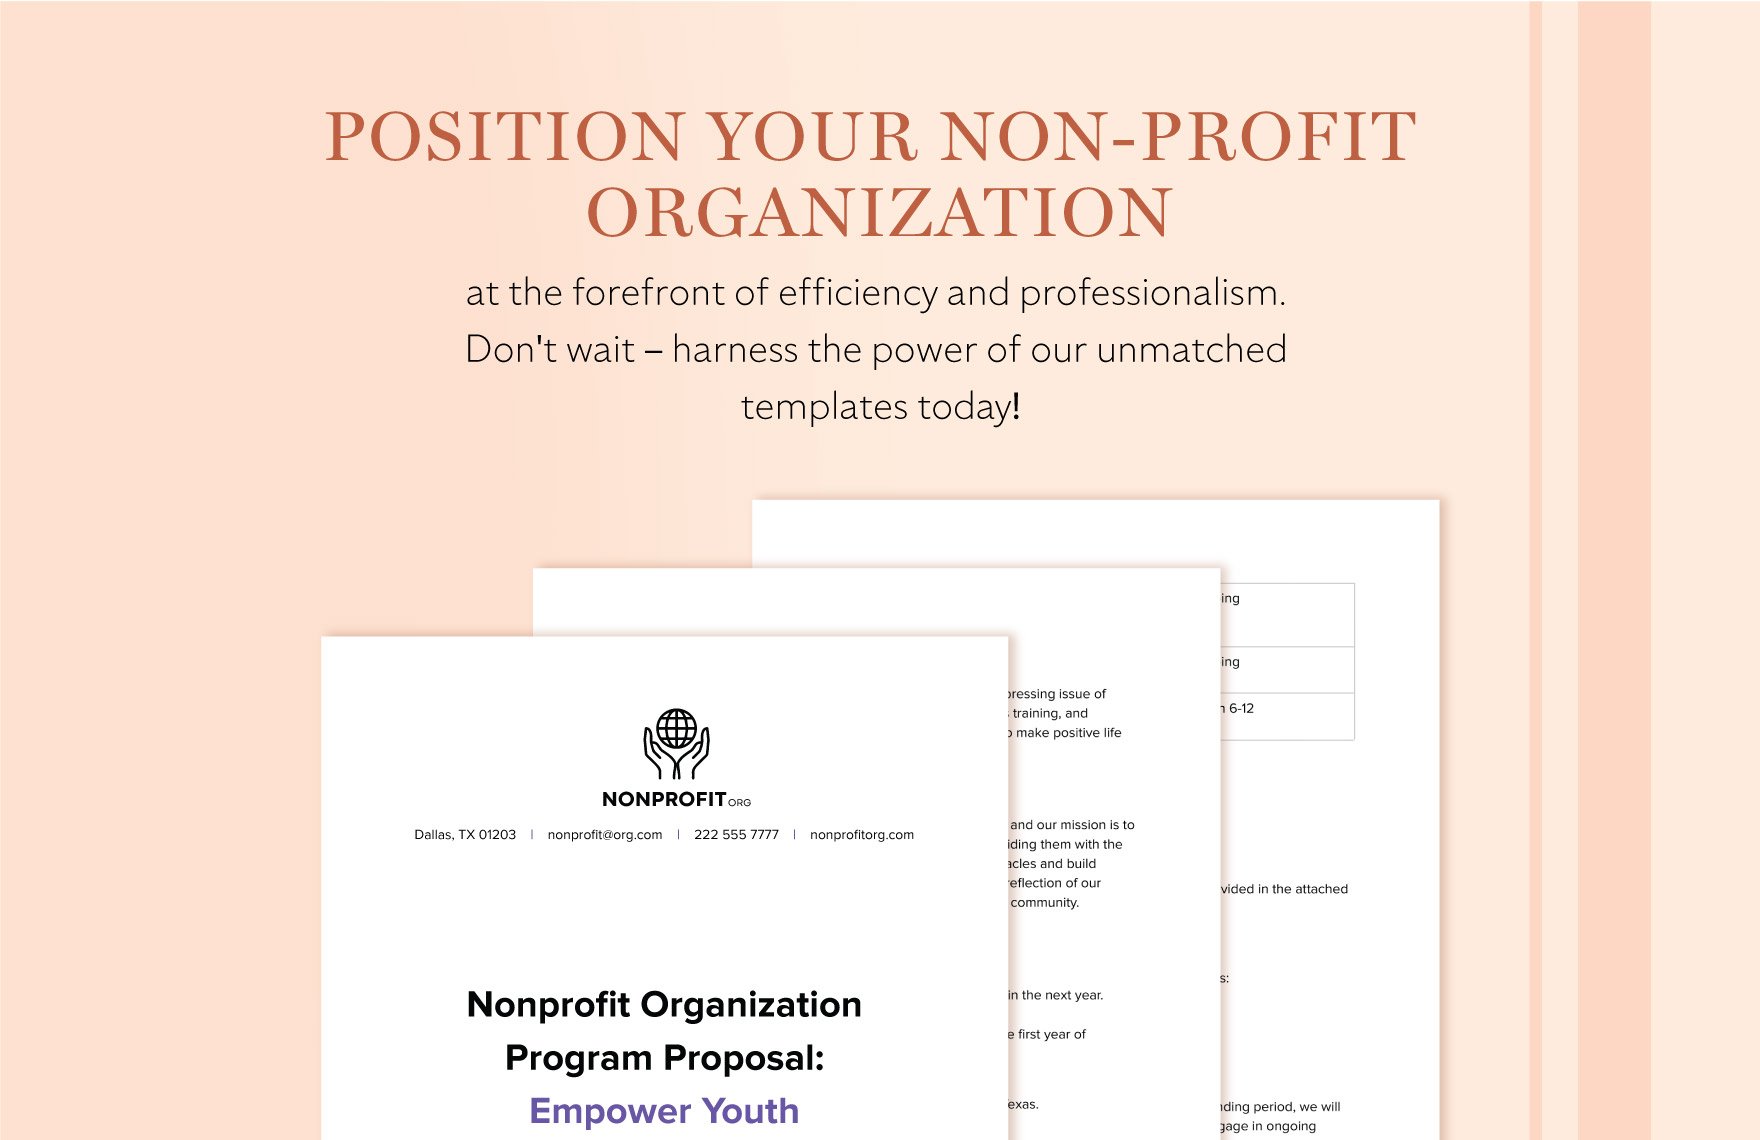 Nonprofit Organization Program Proposal Template